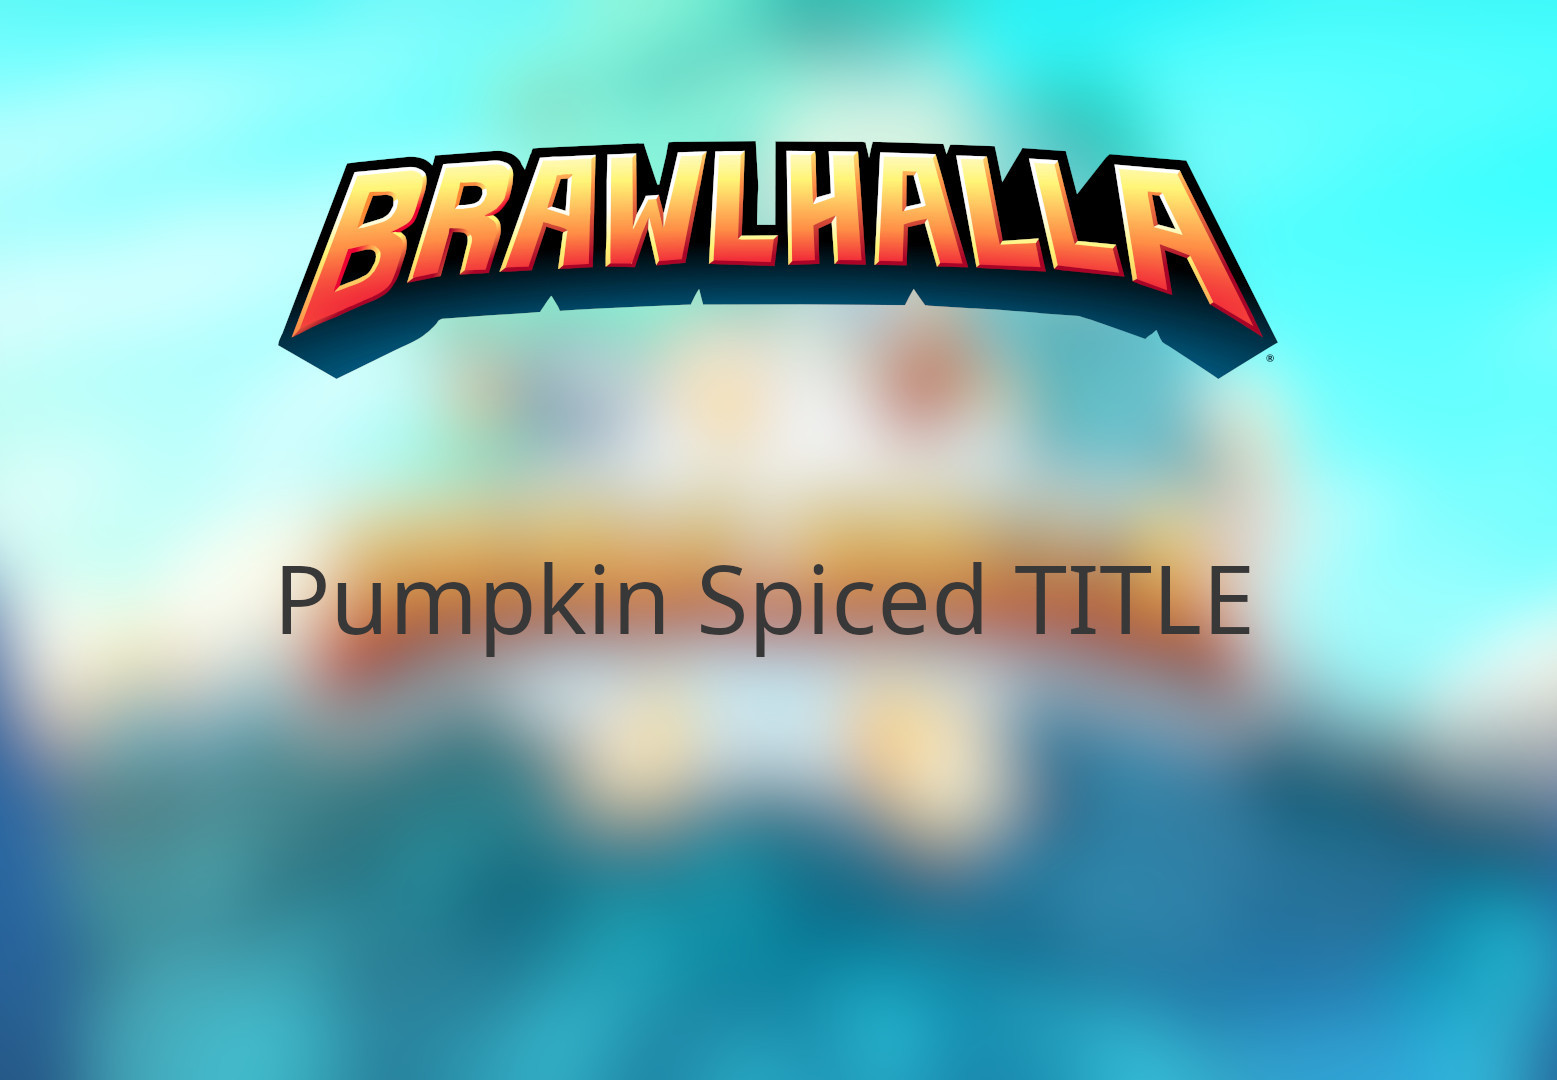 Brawlhalla - Pumpkin Spiced Title DLC CD Key